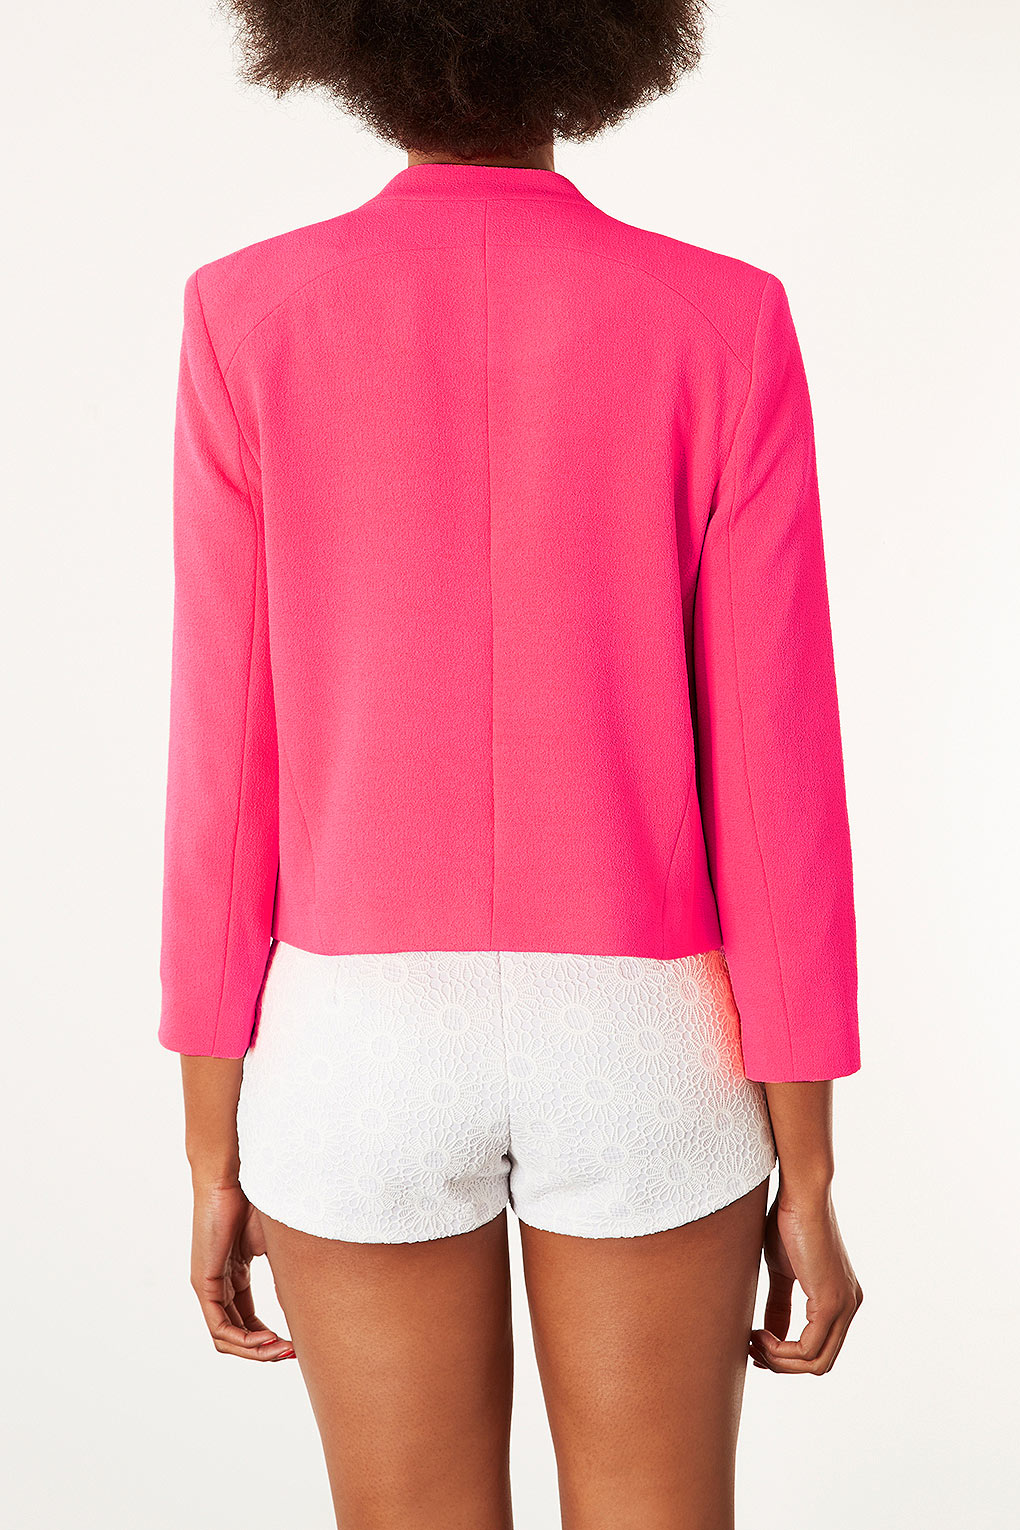 Lyst - Topshop Notch Neck Jacket in Pink